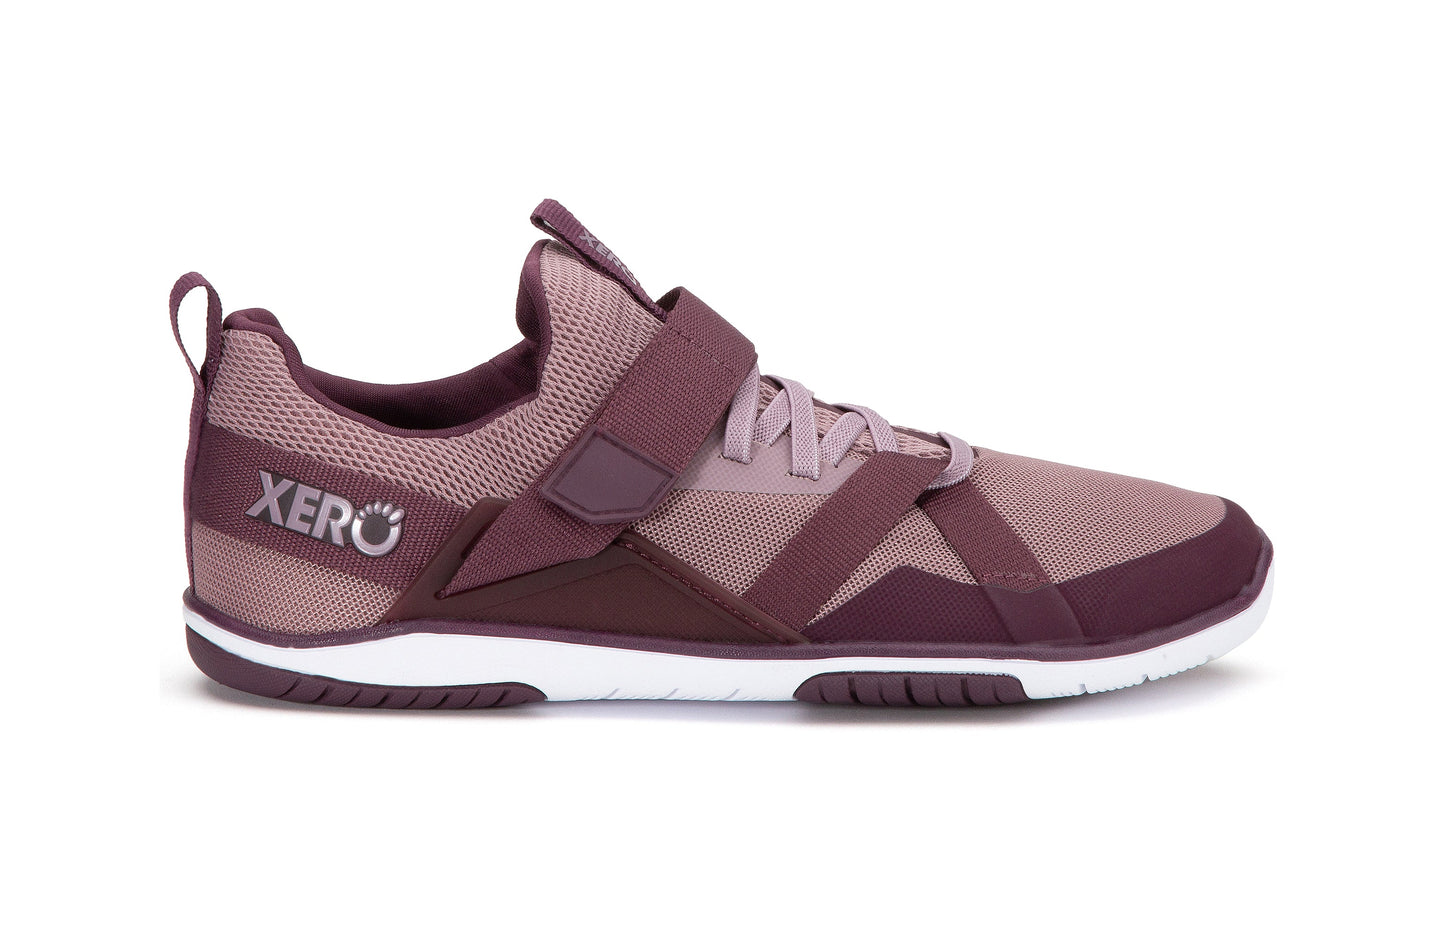 Xero Shoes Forza Trainer Womens barfods træningssko til kvinder i farven elderberry / fig, yderside